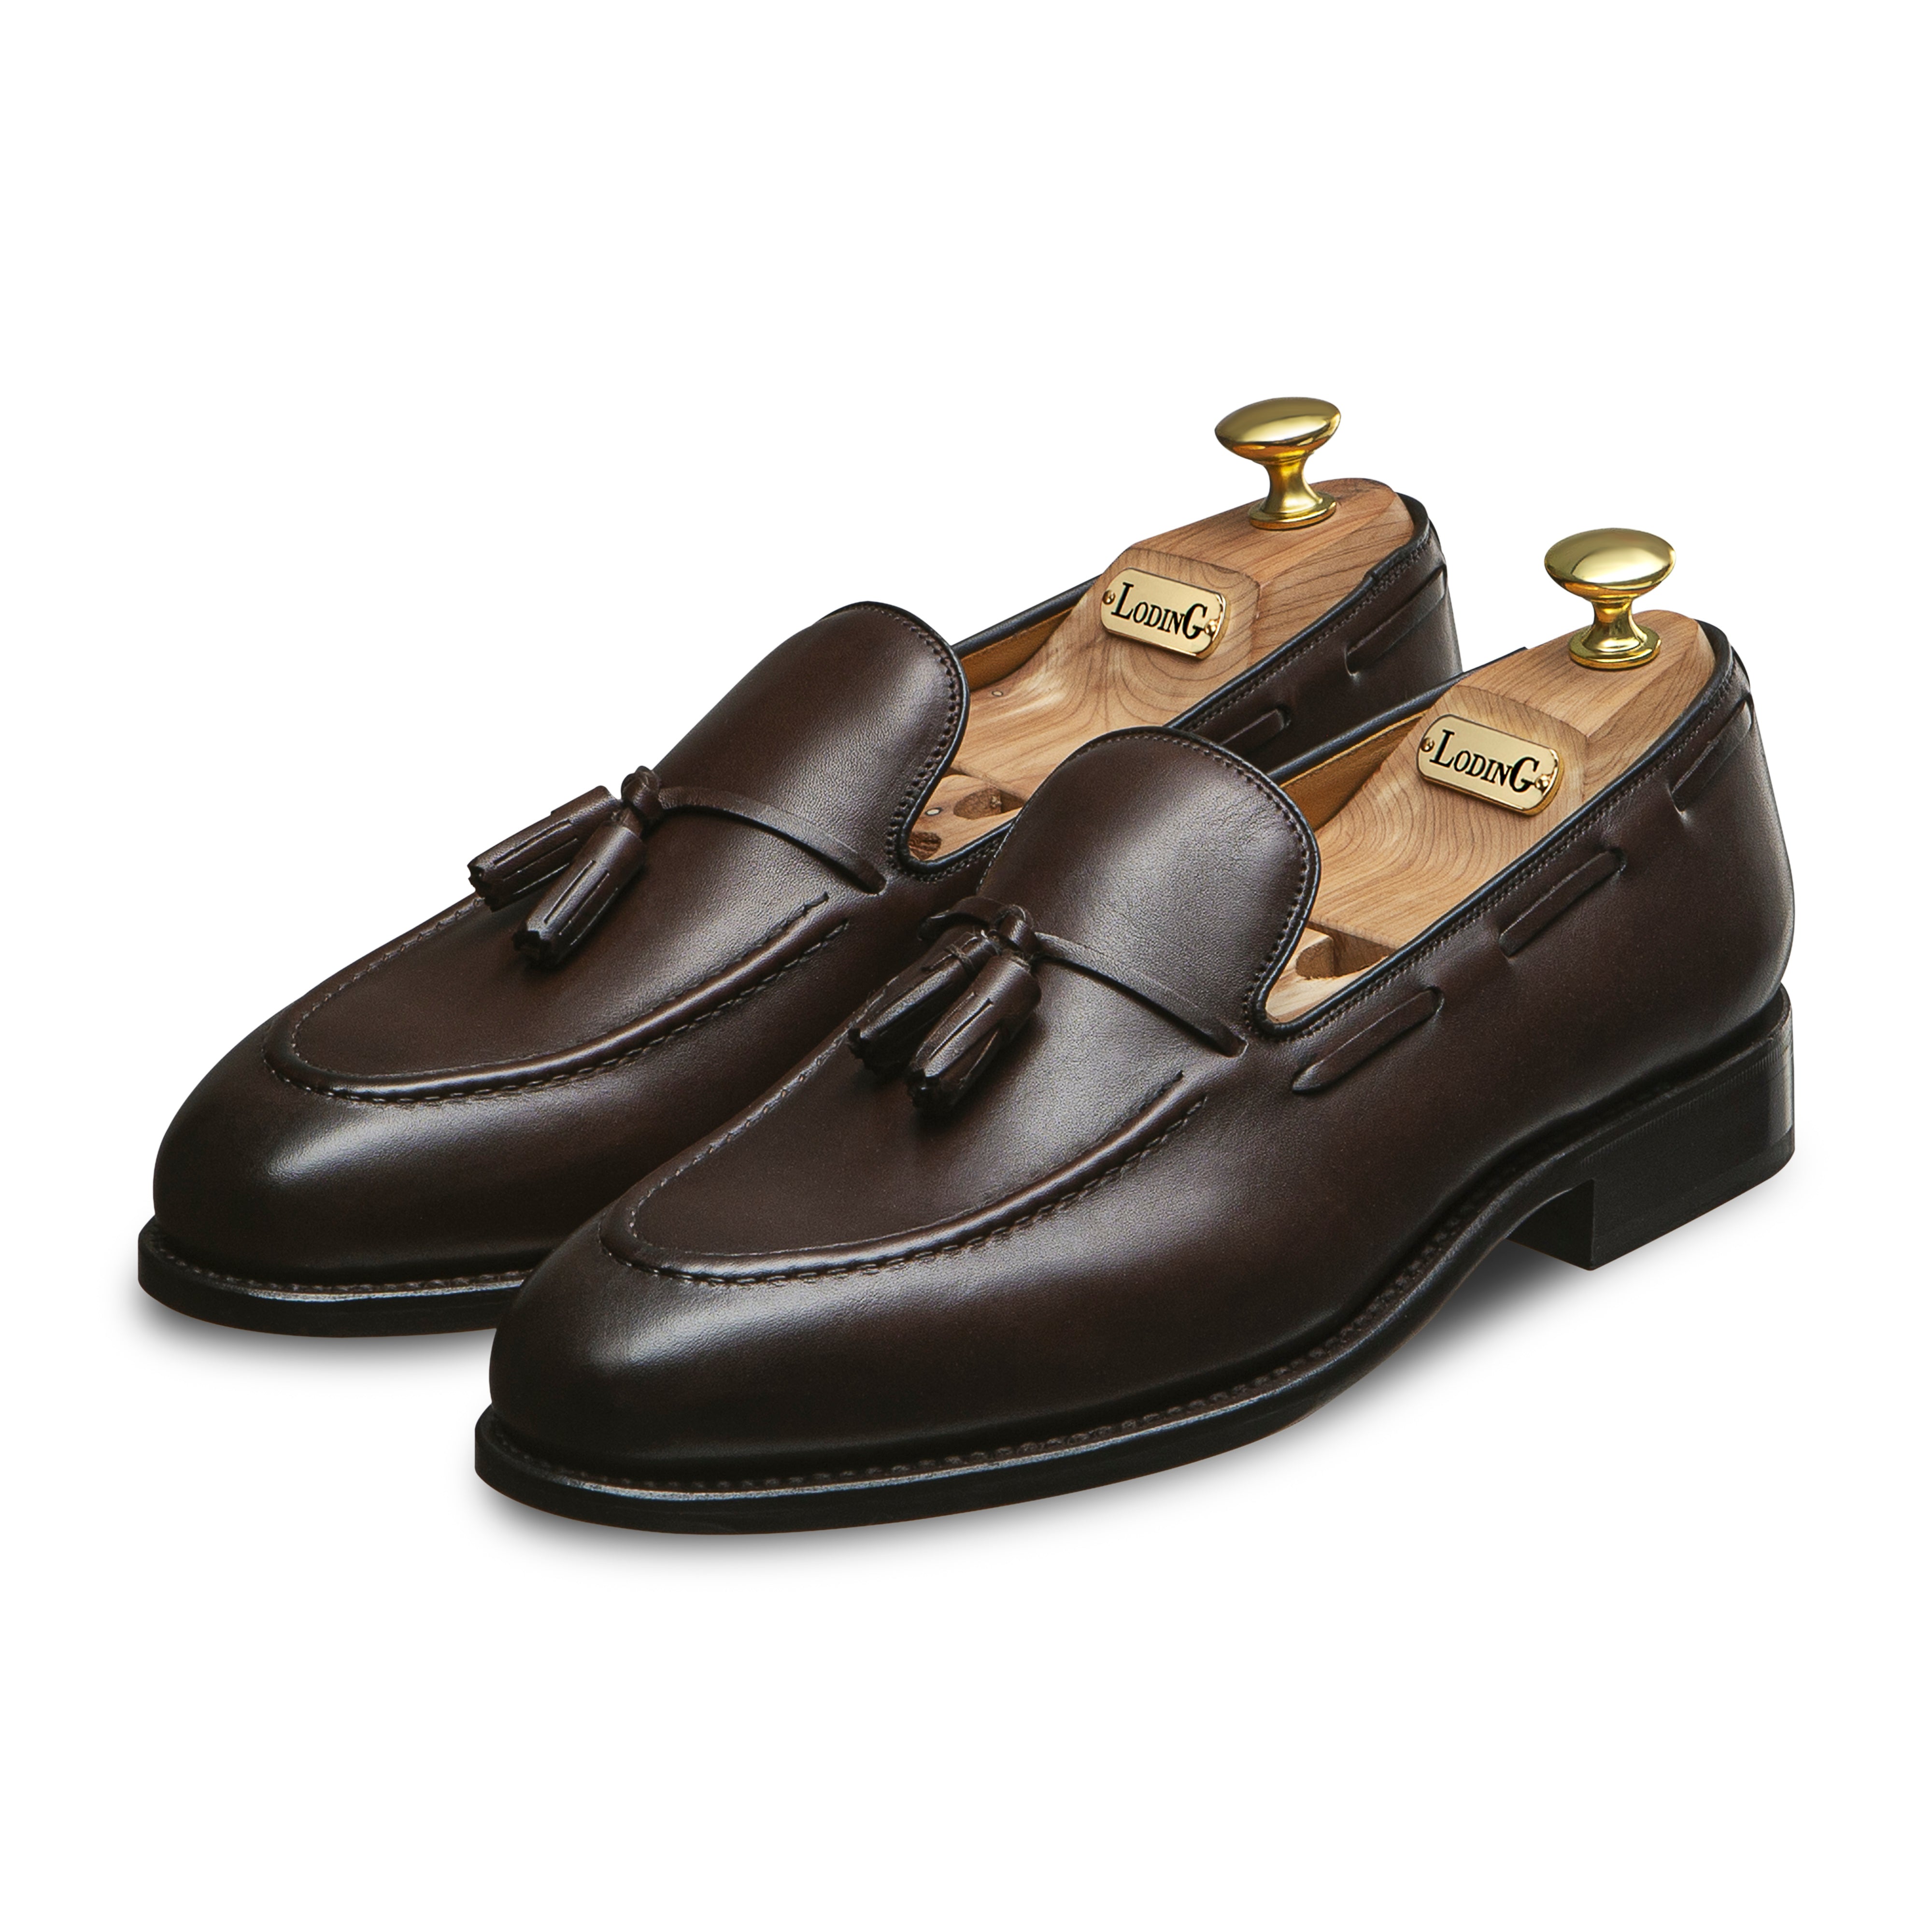 NEW unworn Loding brown tassell loafers 40.5 | Styleforum